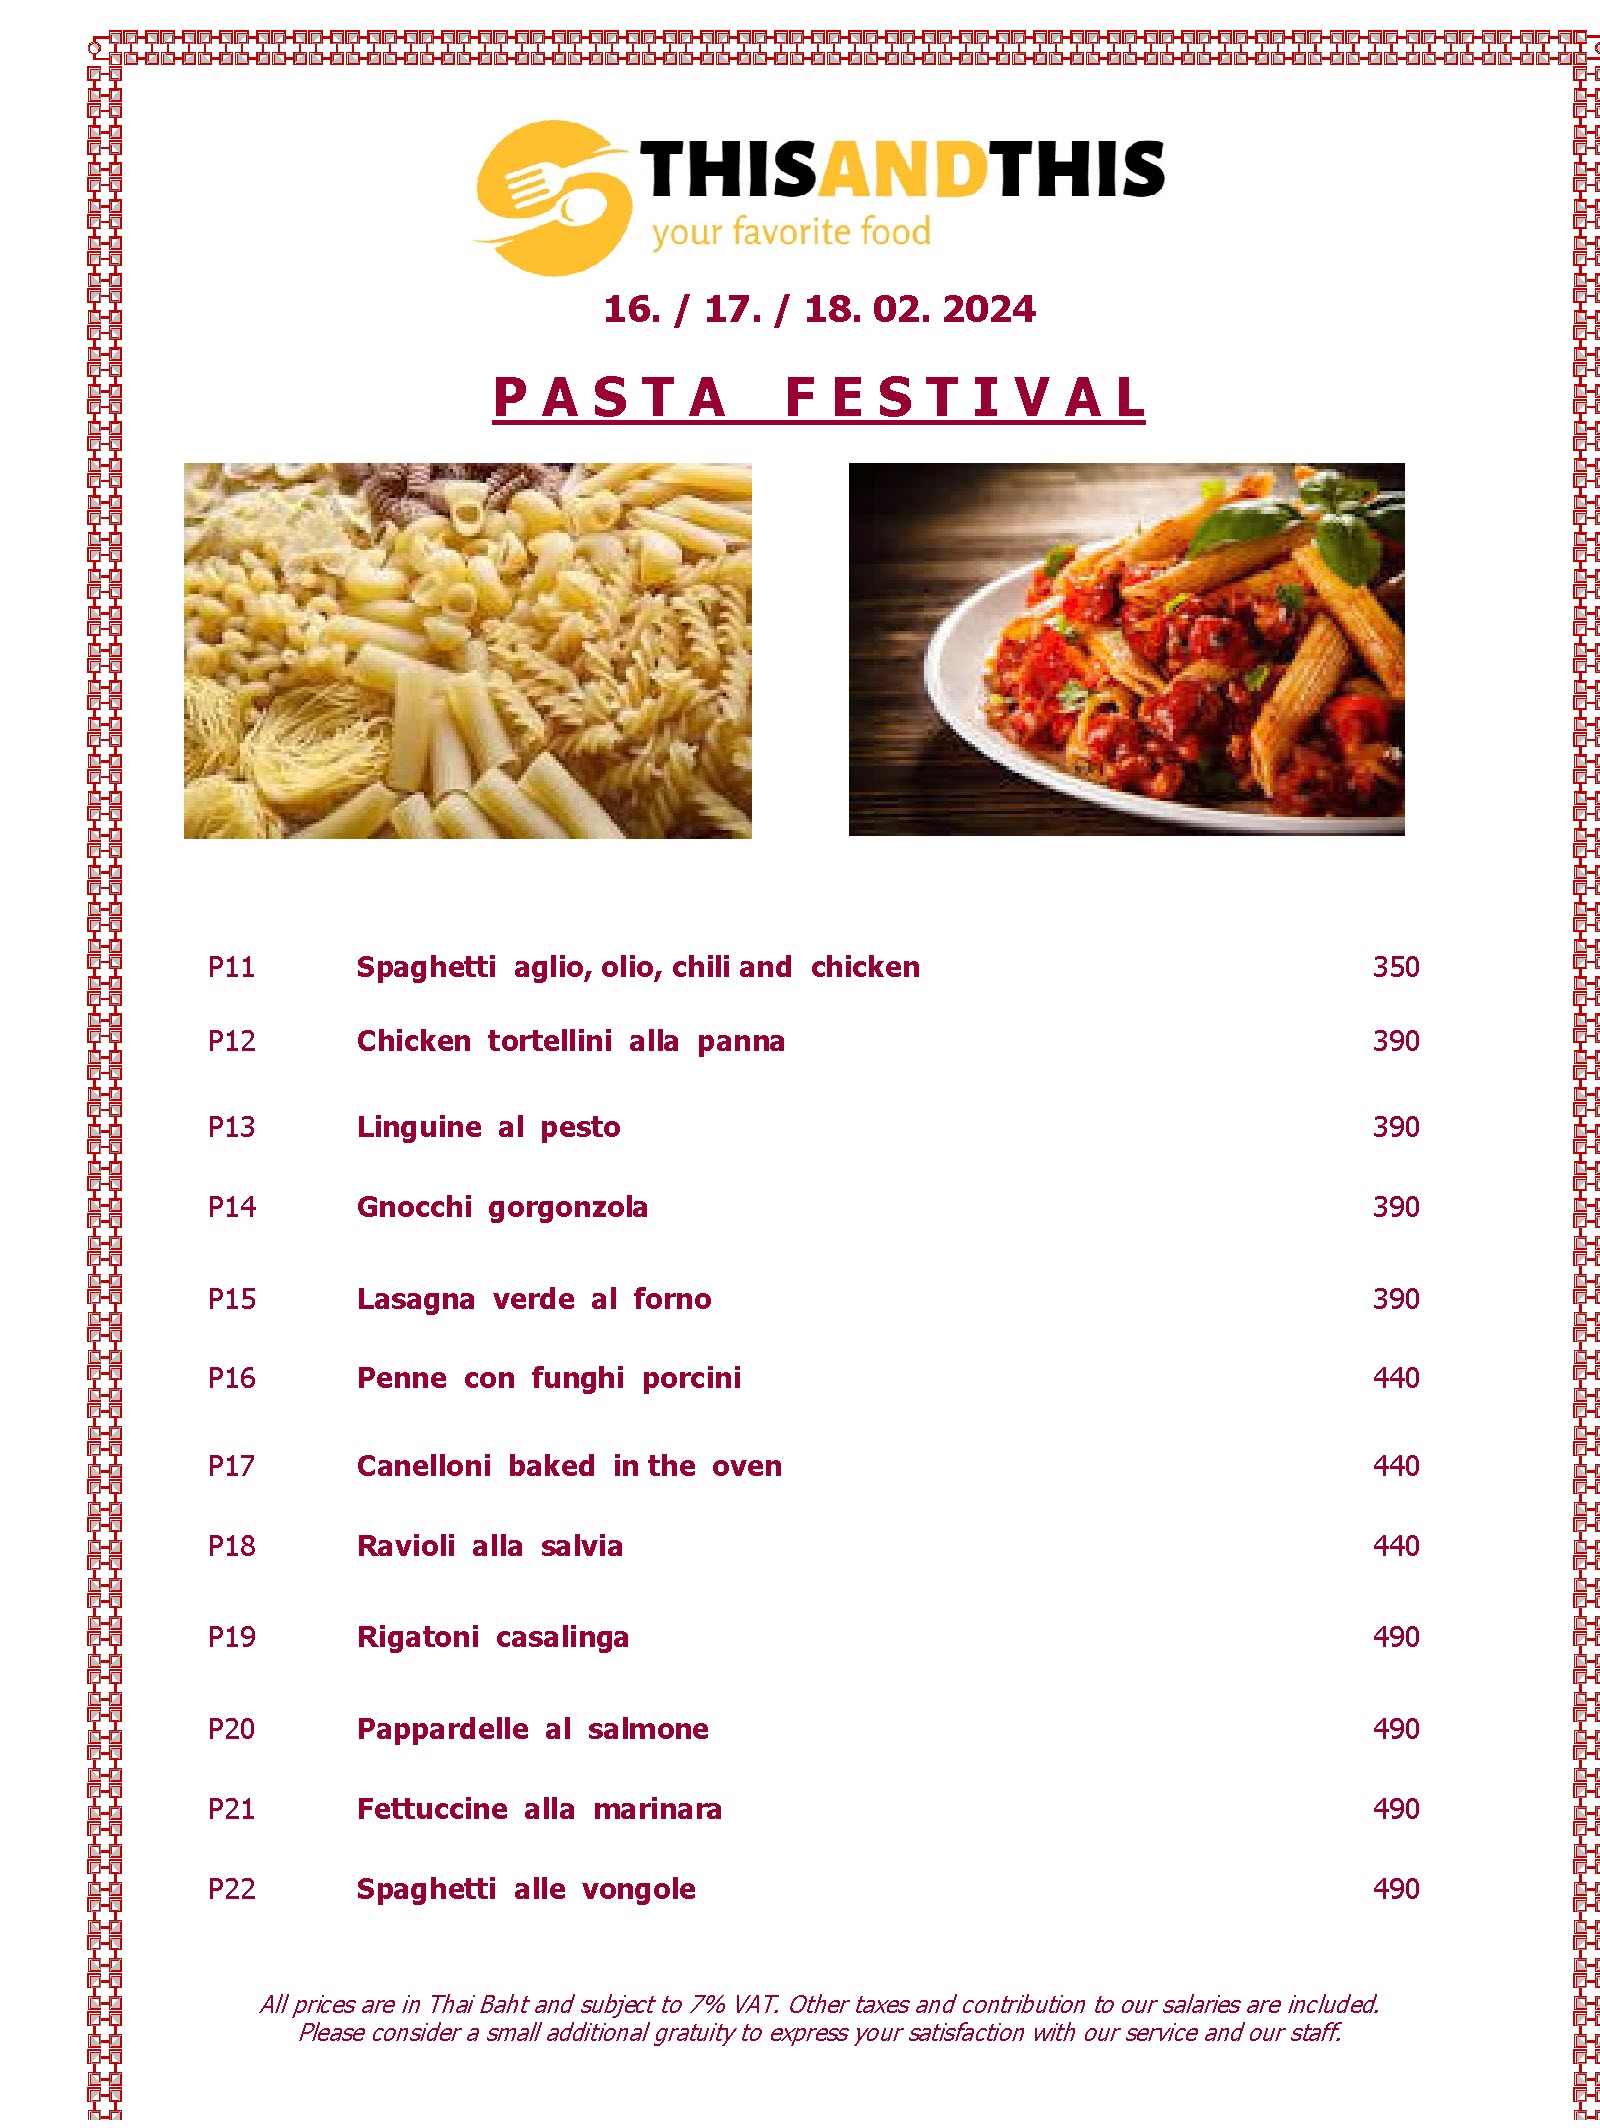 Pasta Festival